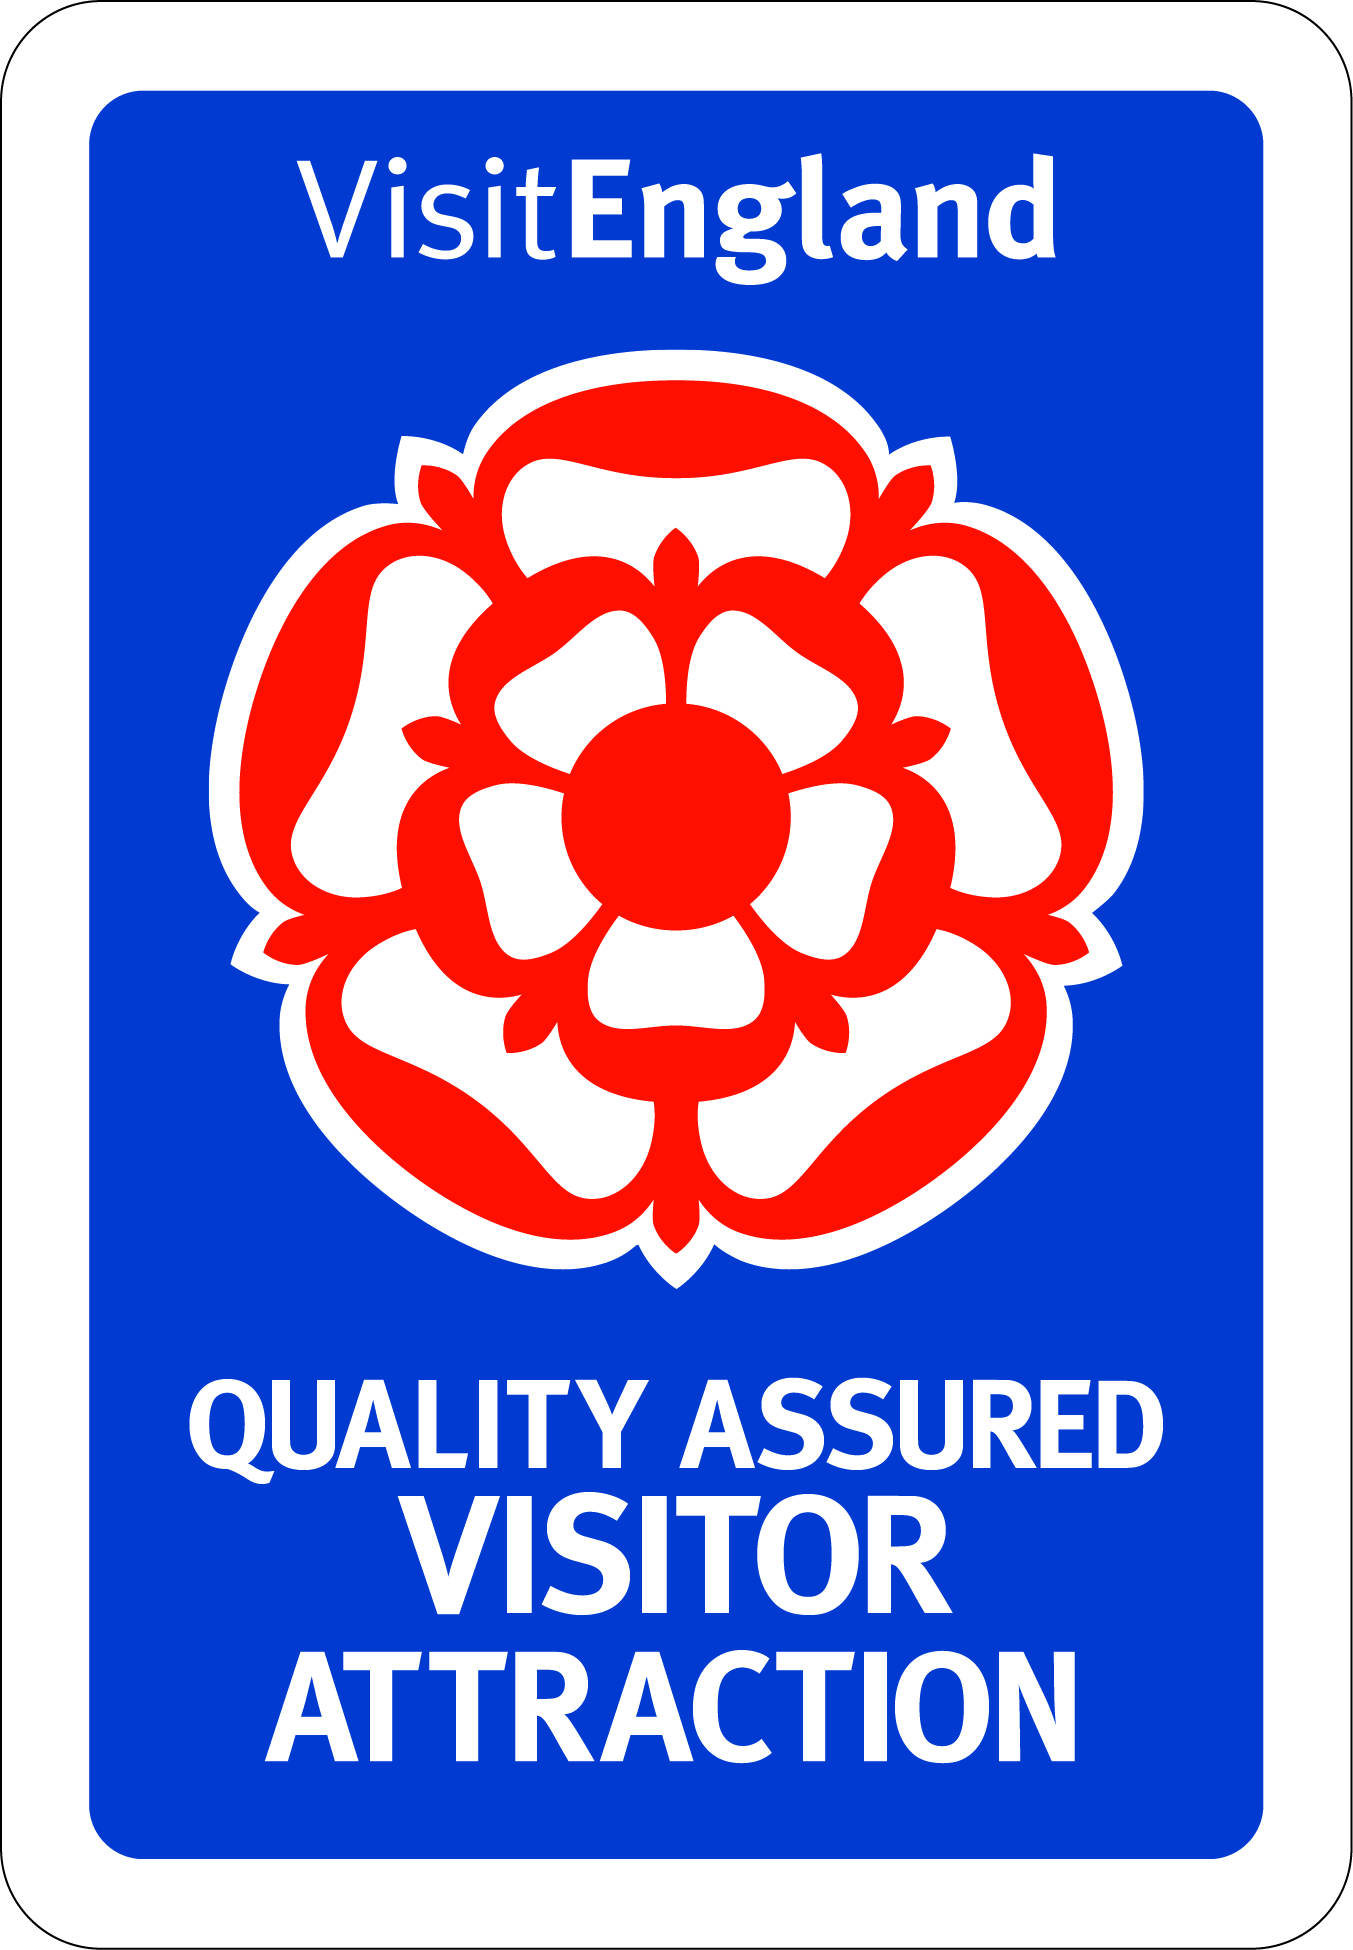 Quality english. Attraction logo.